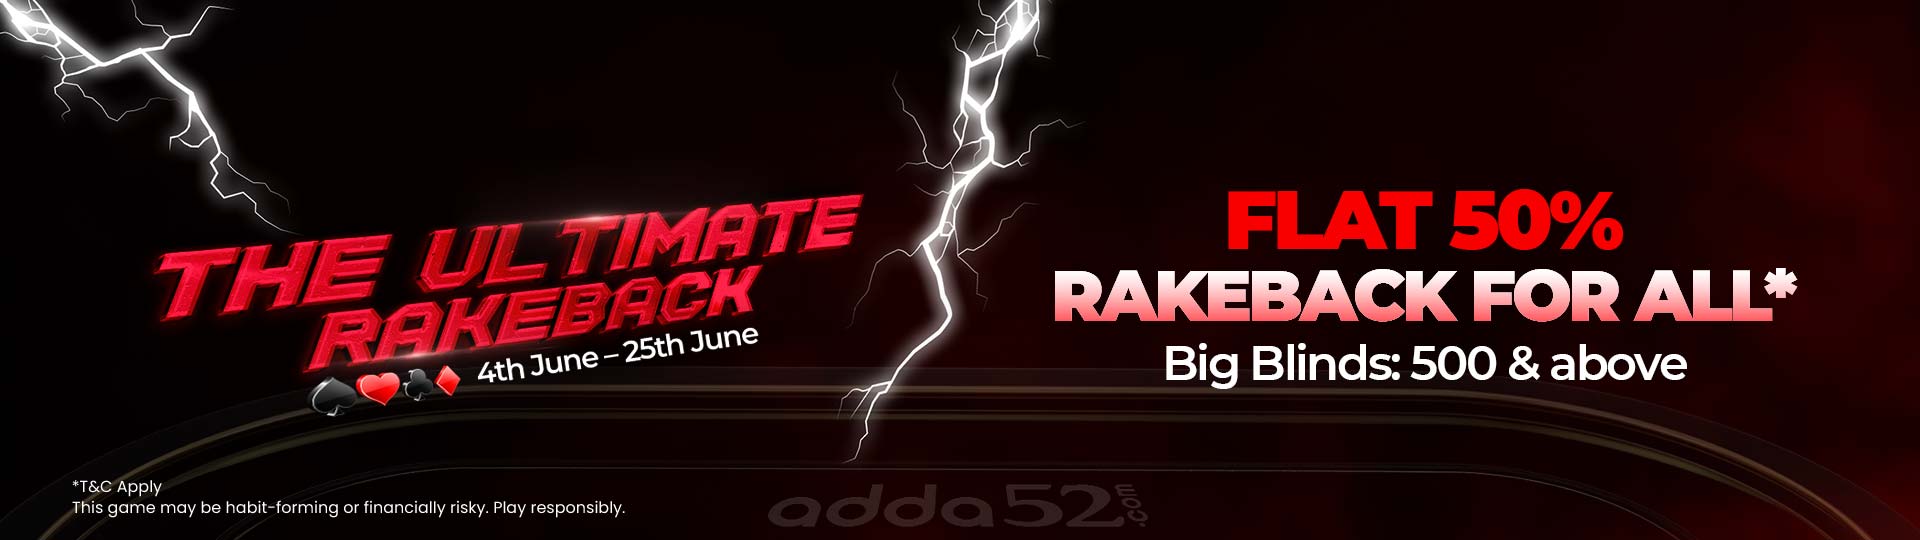 Adda52|Online|Poker|The Ultimate Rakeback|June